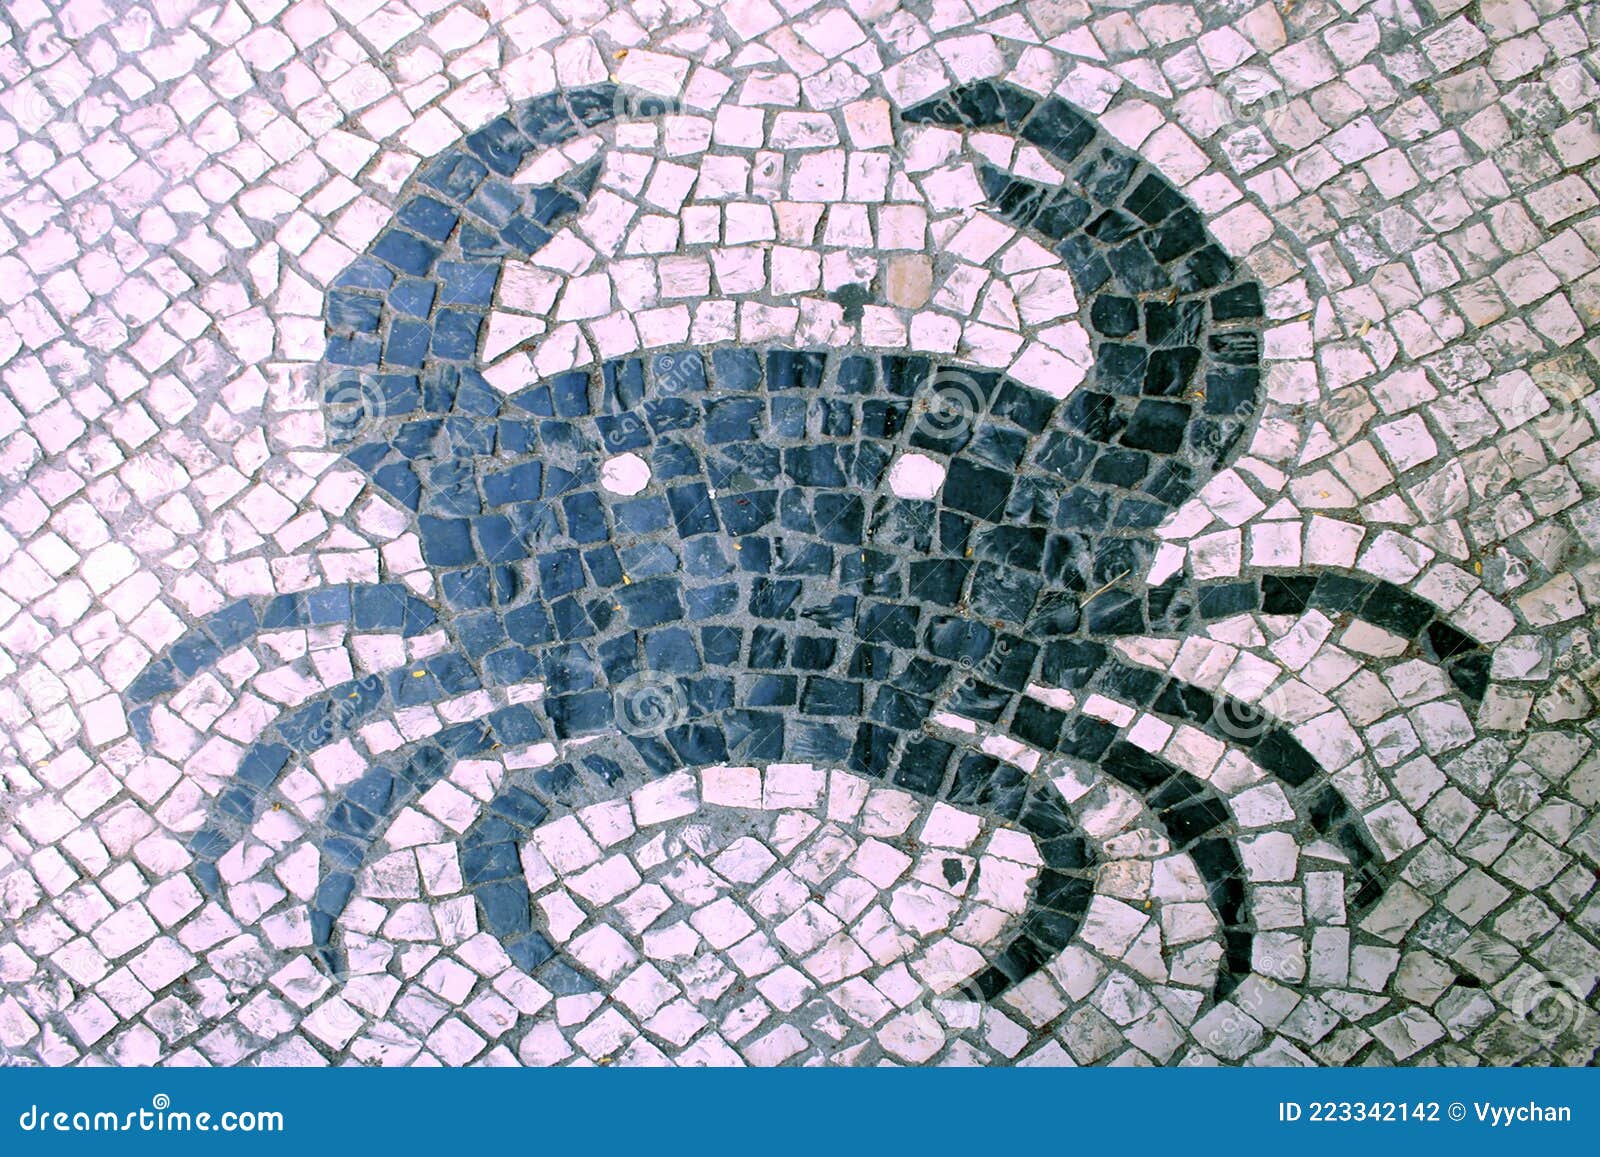 portuguese macau mosaic arts craftsmanship marine life crab macao mosaico cobblestone street cultural heritage architecture